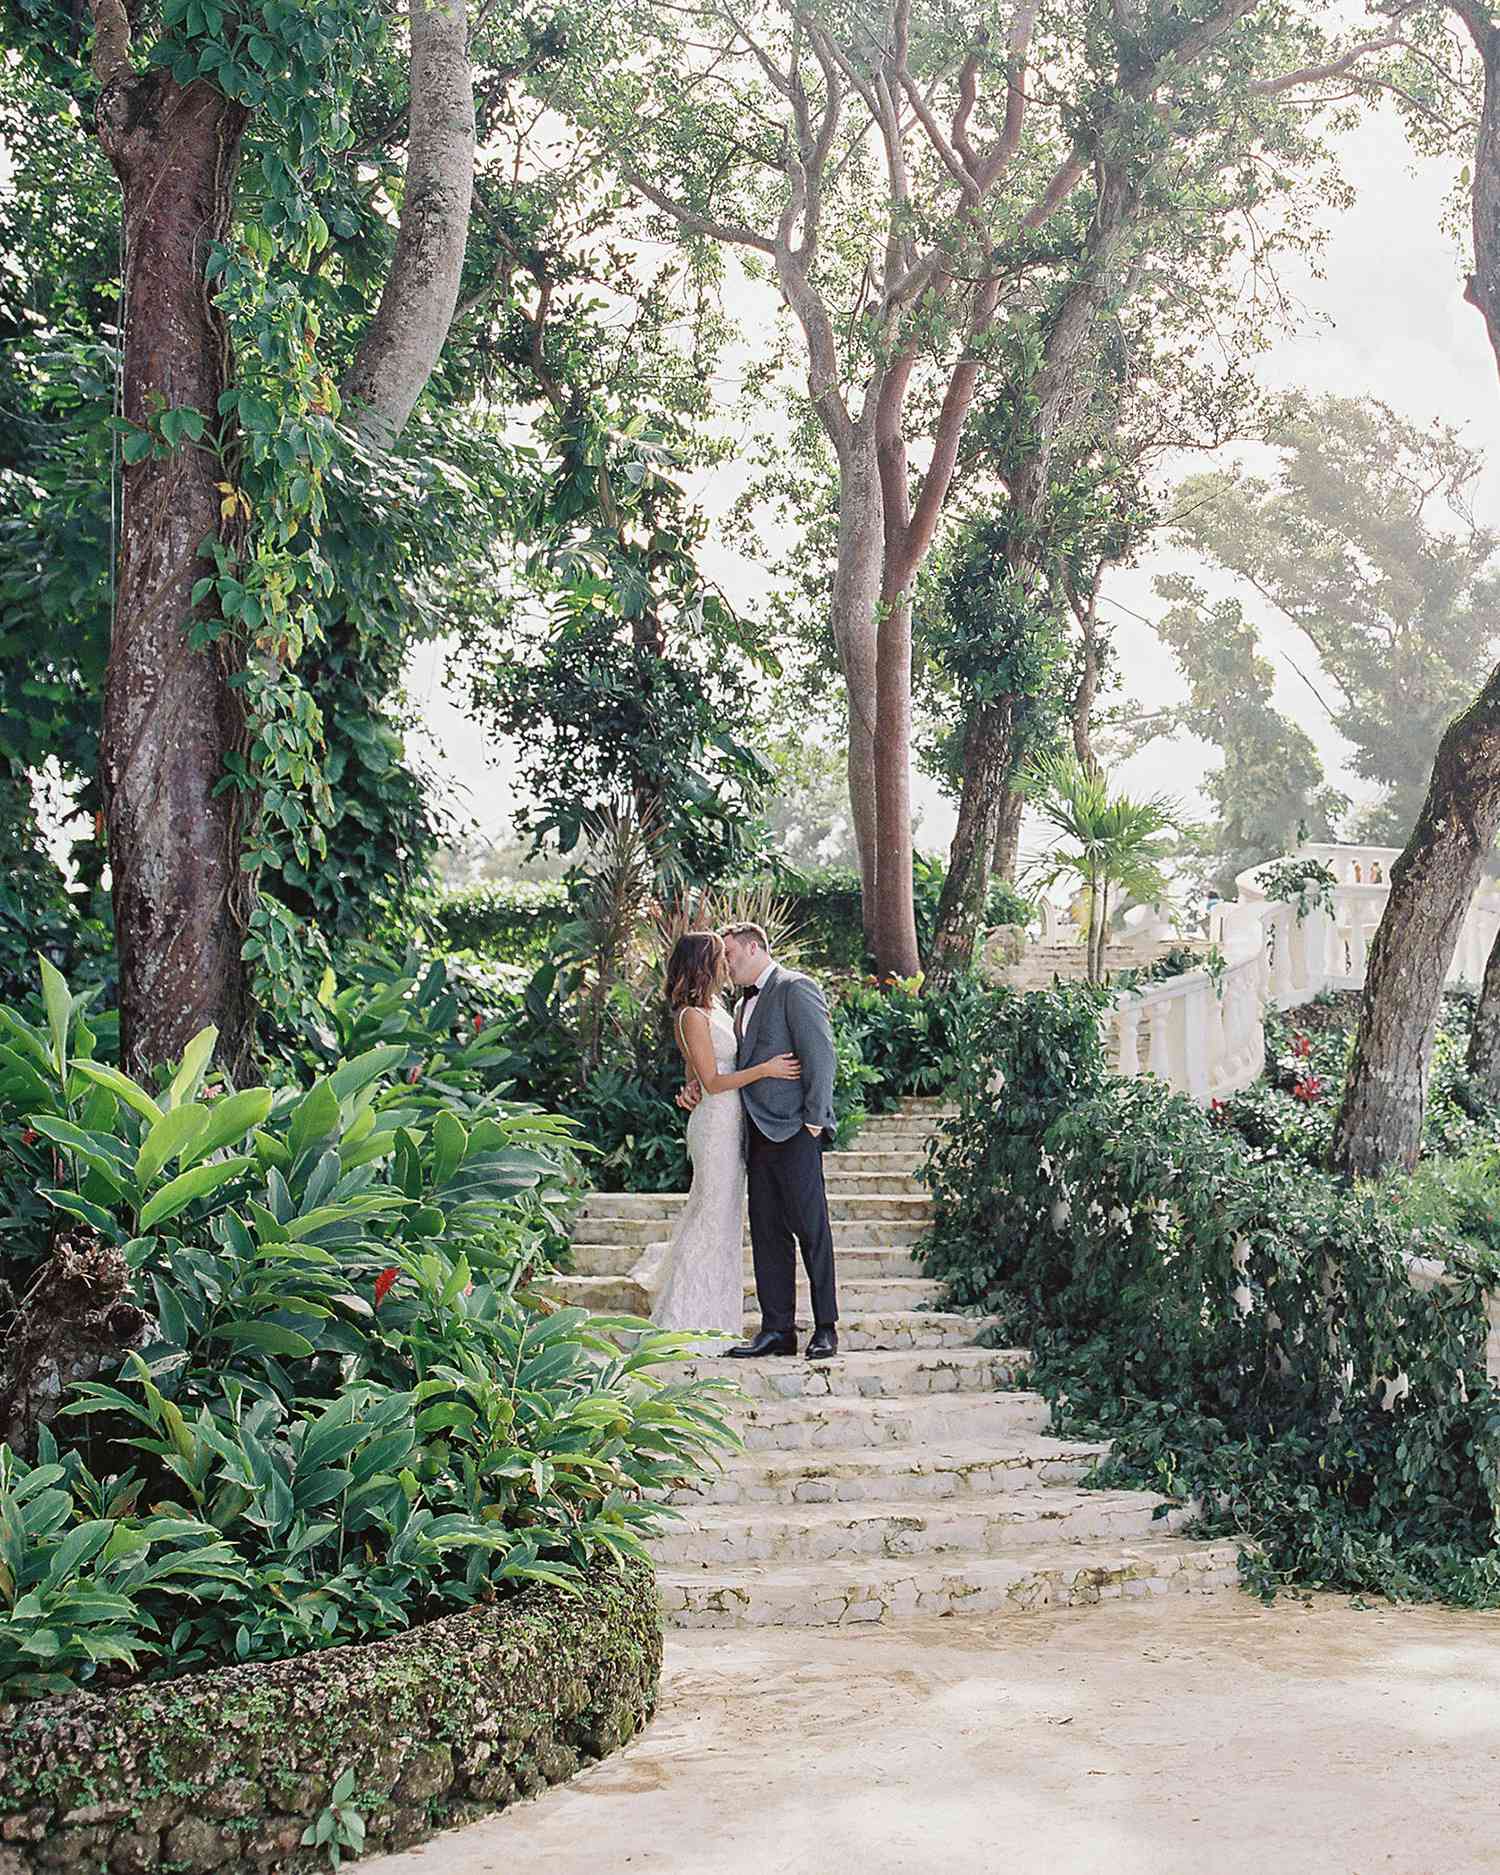 jessica ryan wedding couple kissing on stairway in lush garden